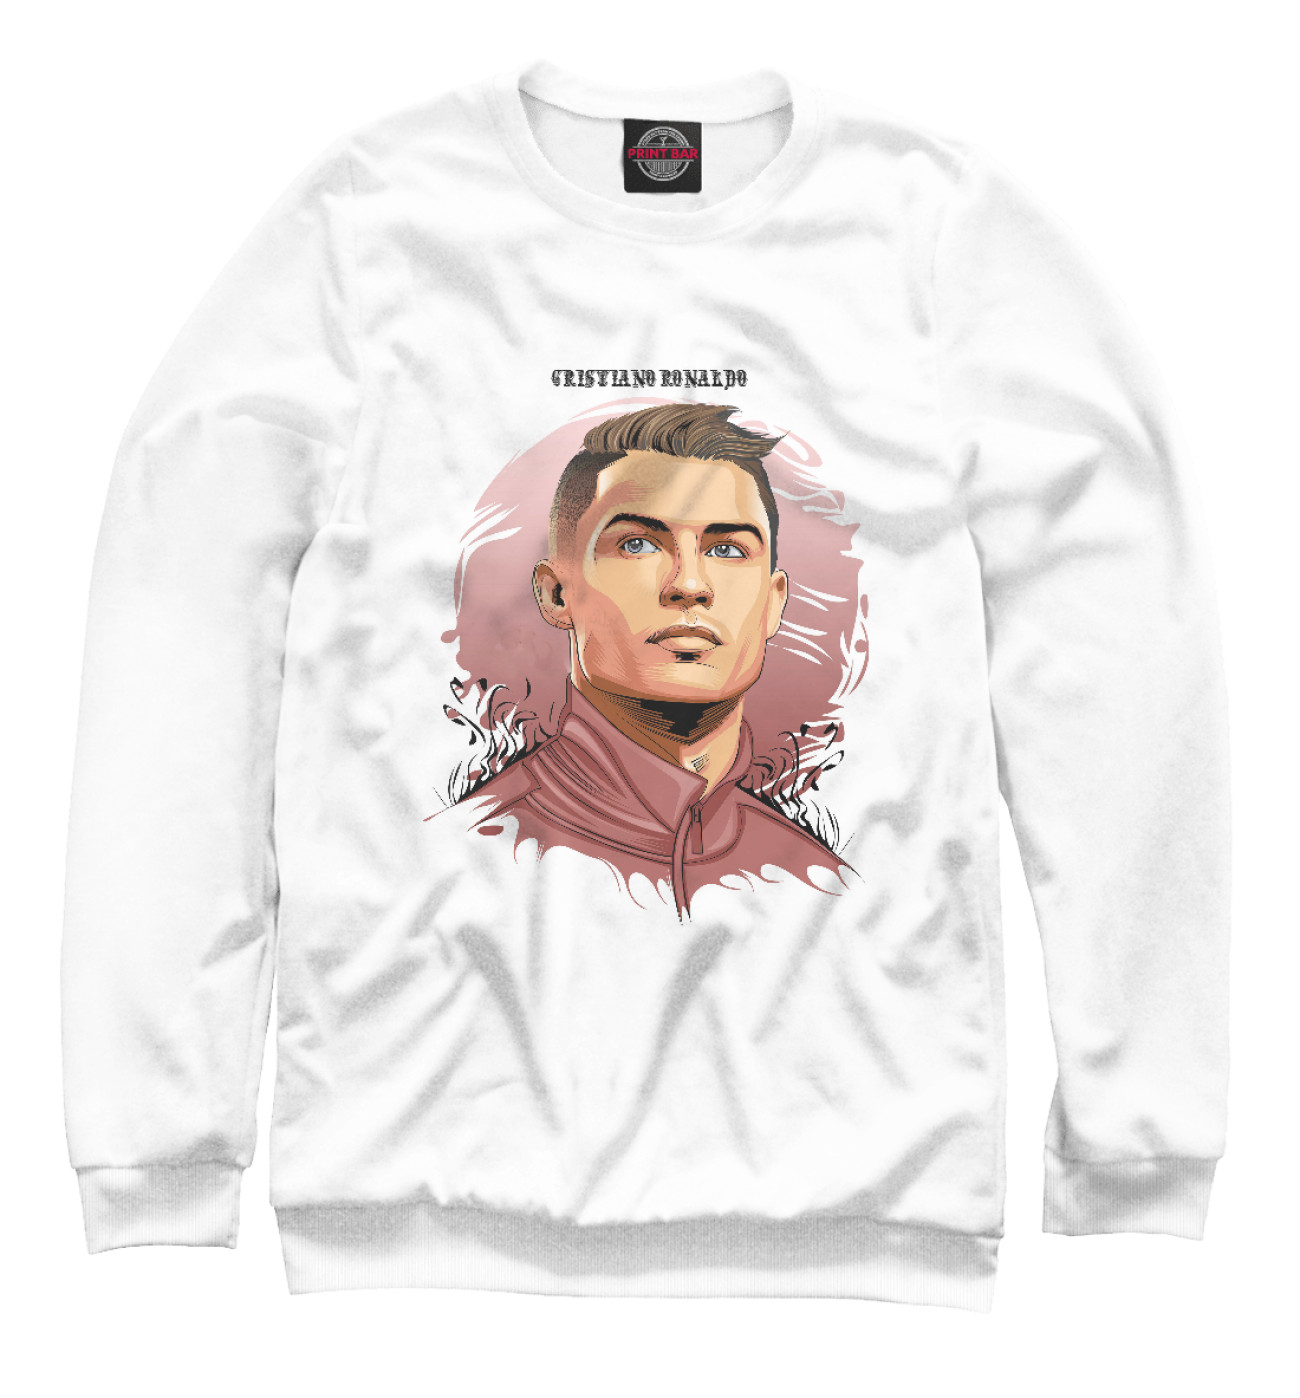 Мужской Свитшот Cristiano Ronaldo, артикул: FLT-876531-swi-2